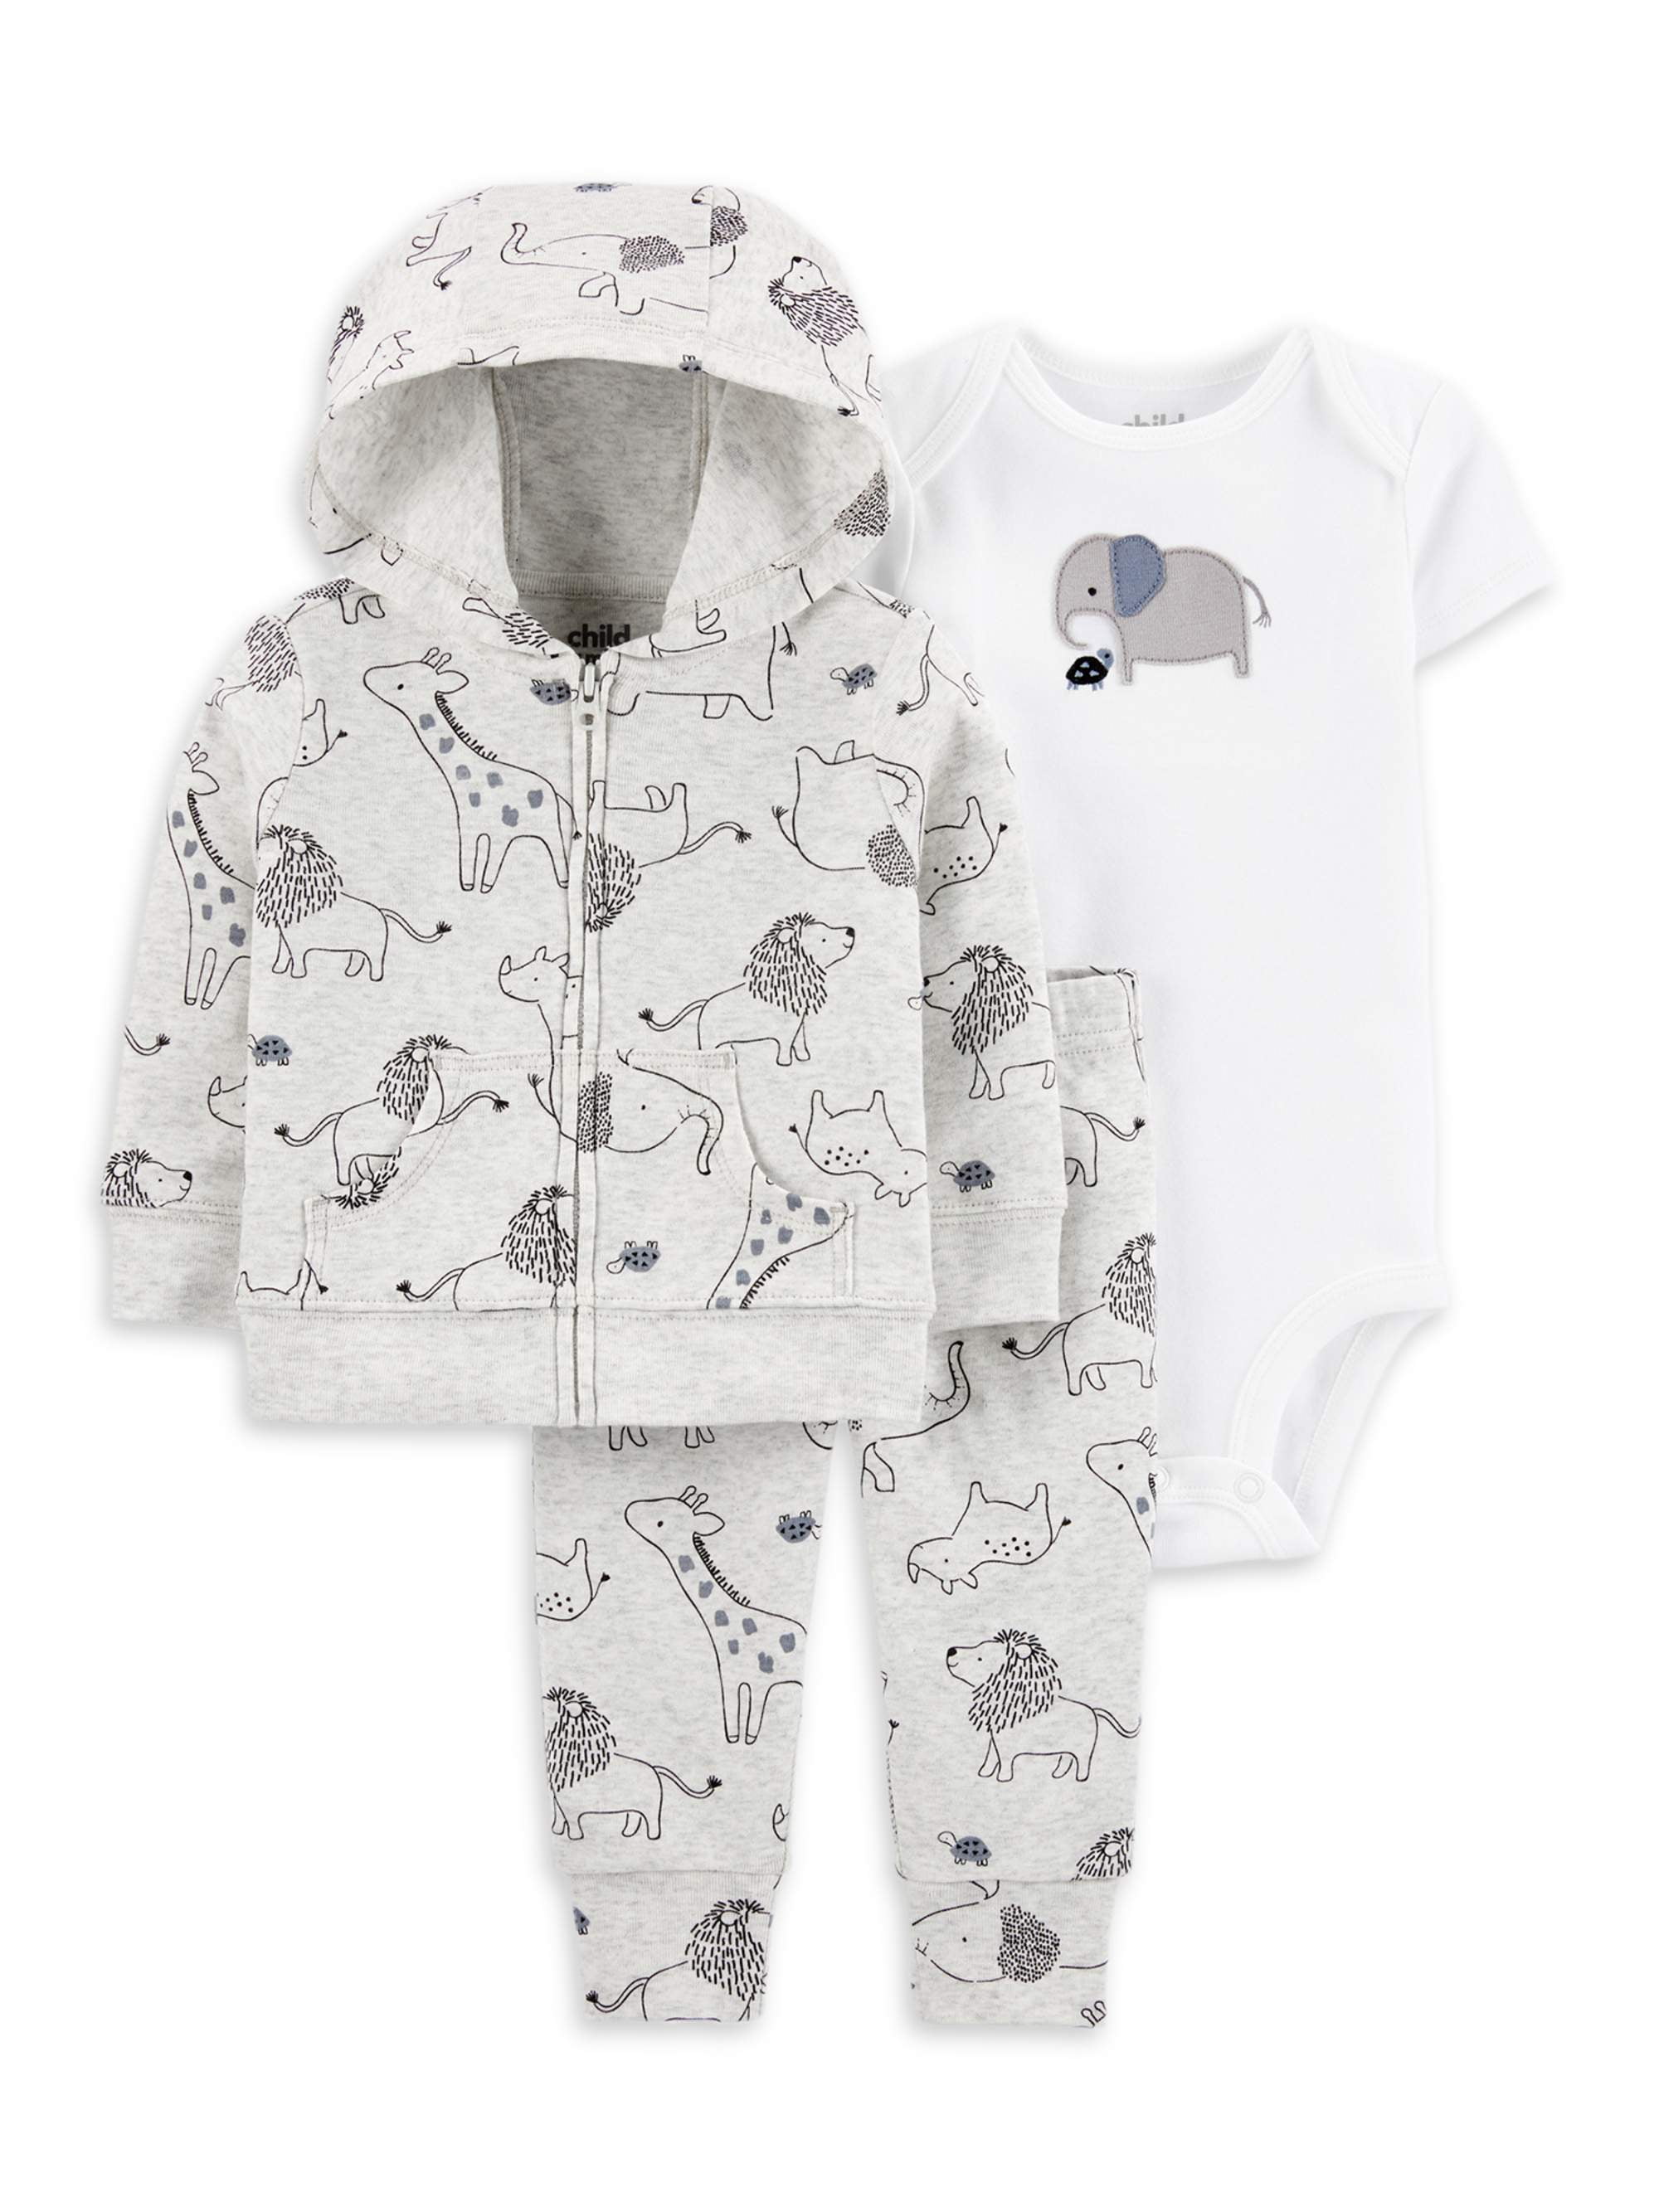 Toddler Baby Boys Bodysuit Short-Sleeve Onesie Heart Pattern Print Outfit Winter Pajamas